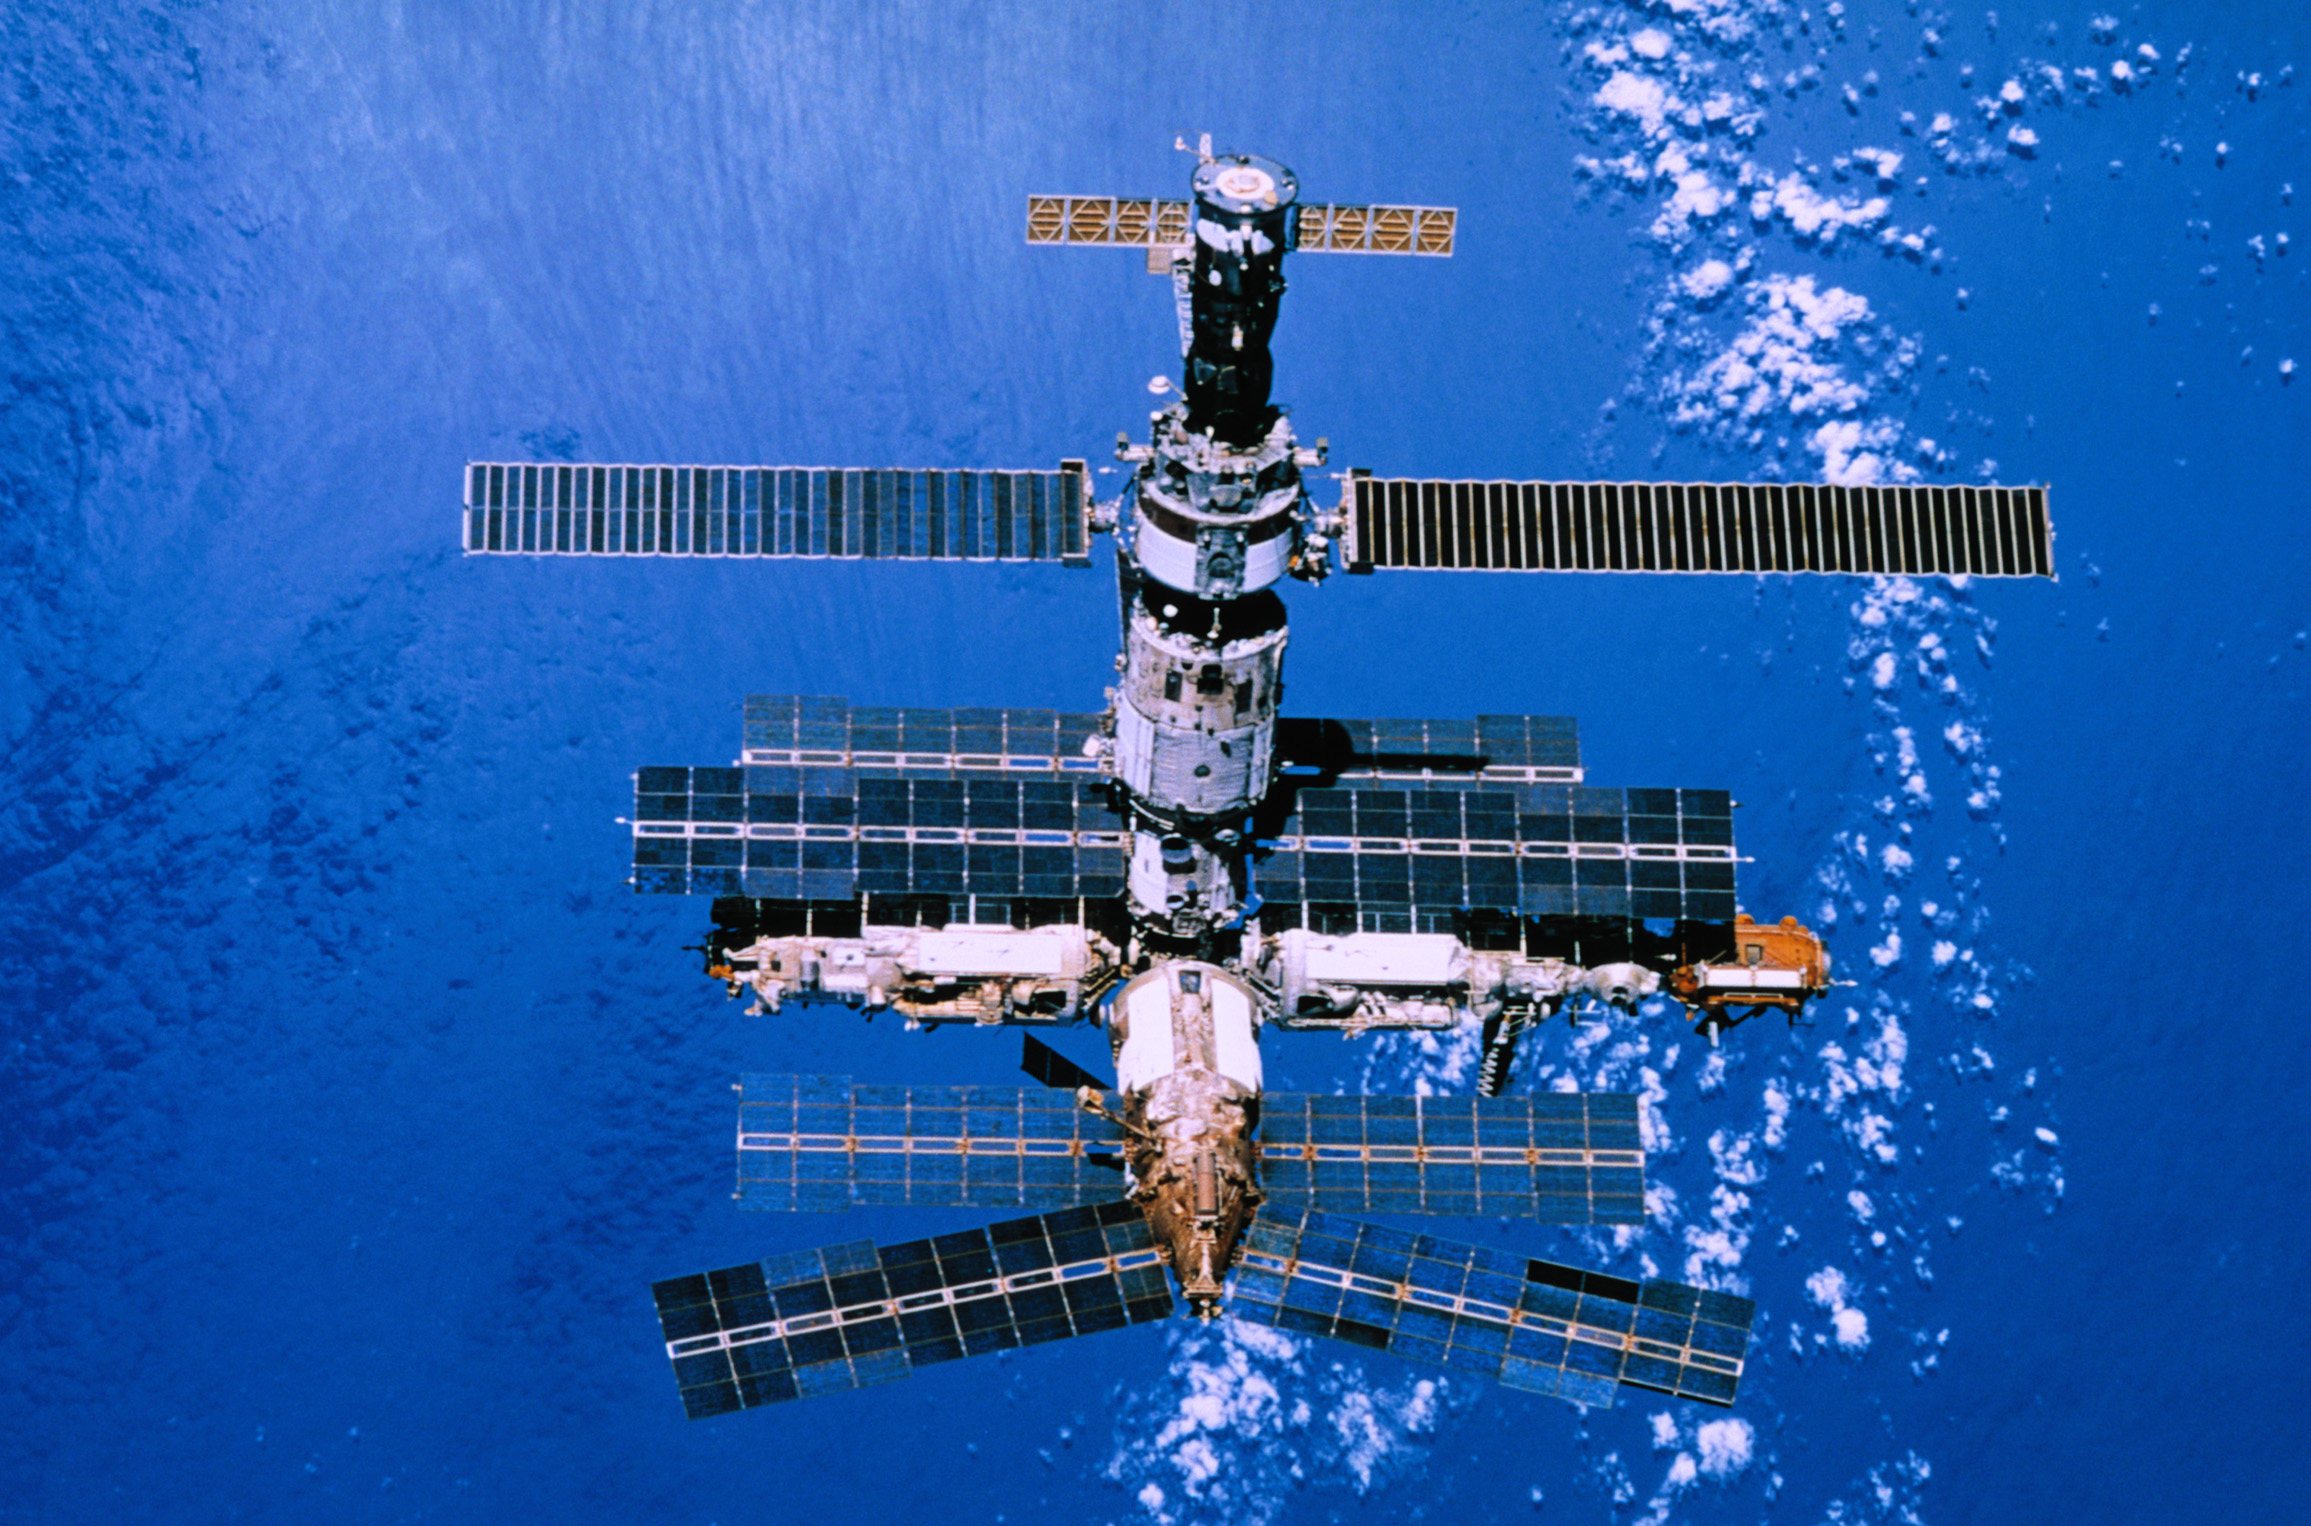 Mir org. Станция мир 1986. 1986 Запущена Советская орбитальная станция «мир». Мир Советская орбитальная станция 2001. В тихом океане затоплена орбитальная станция «мир».